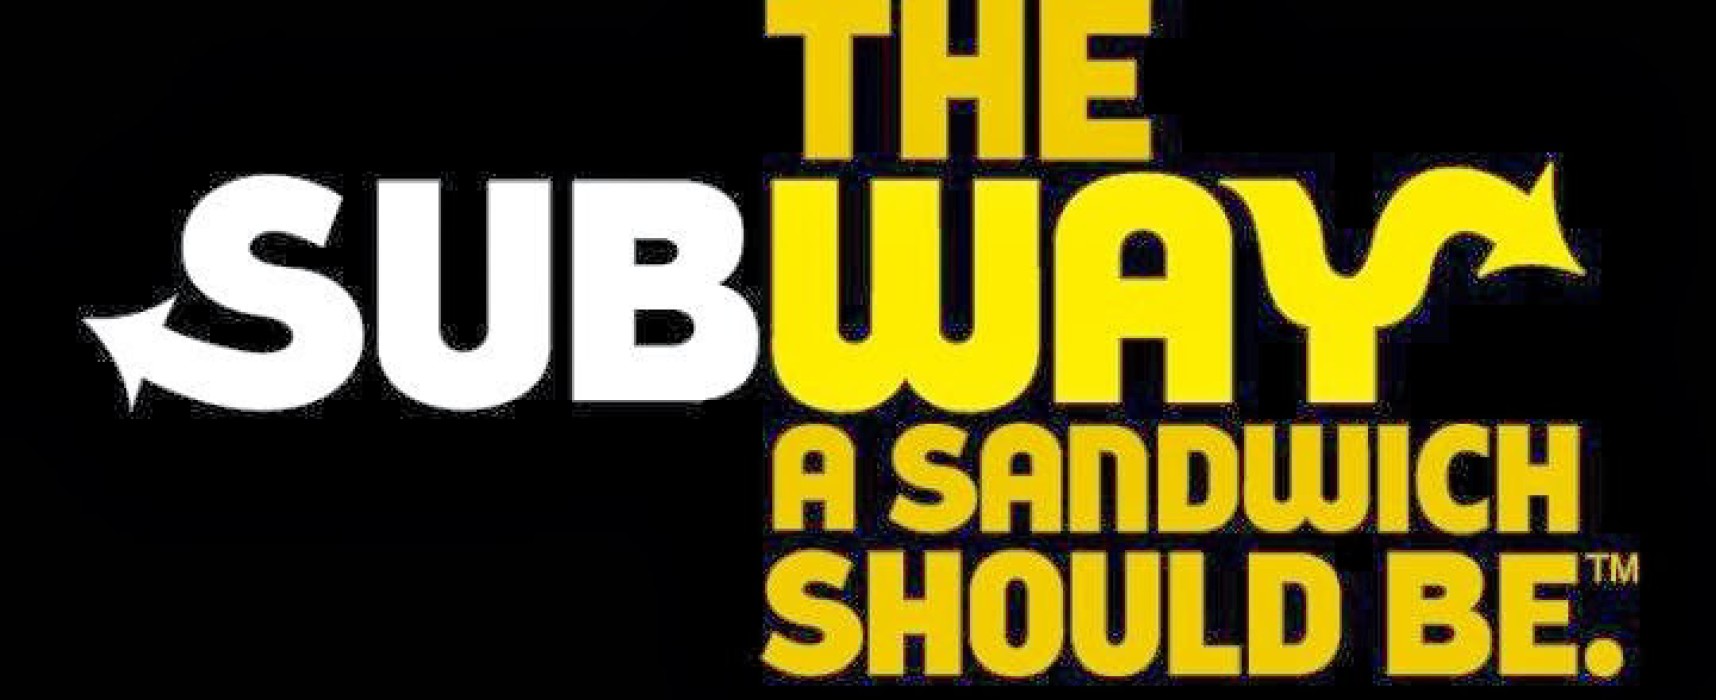 Make A Subway Sandwich In 9 Easy Steps